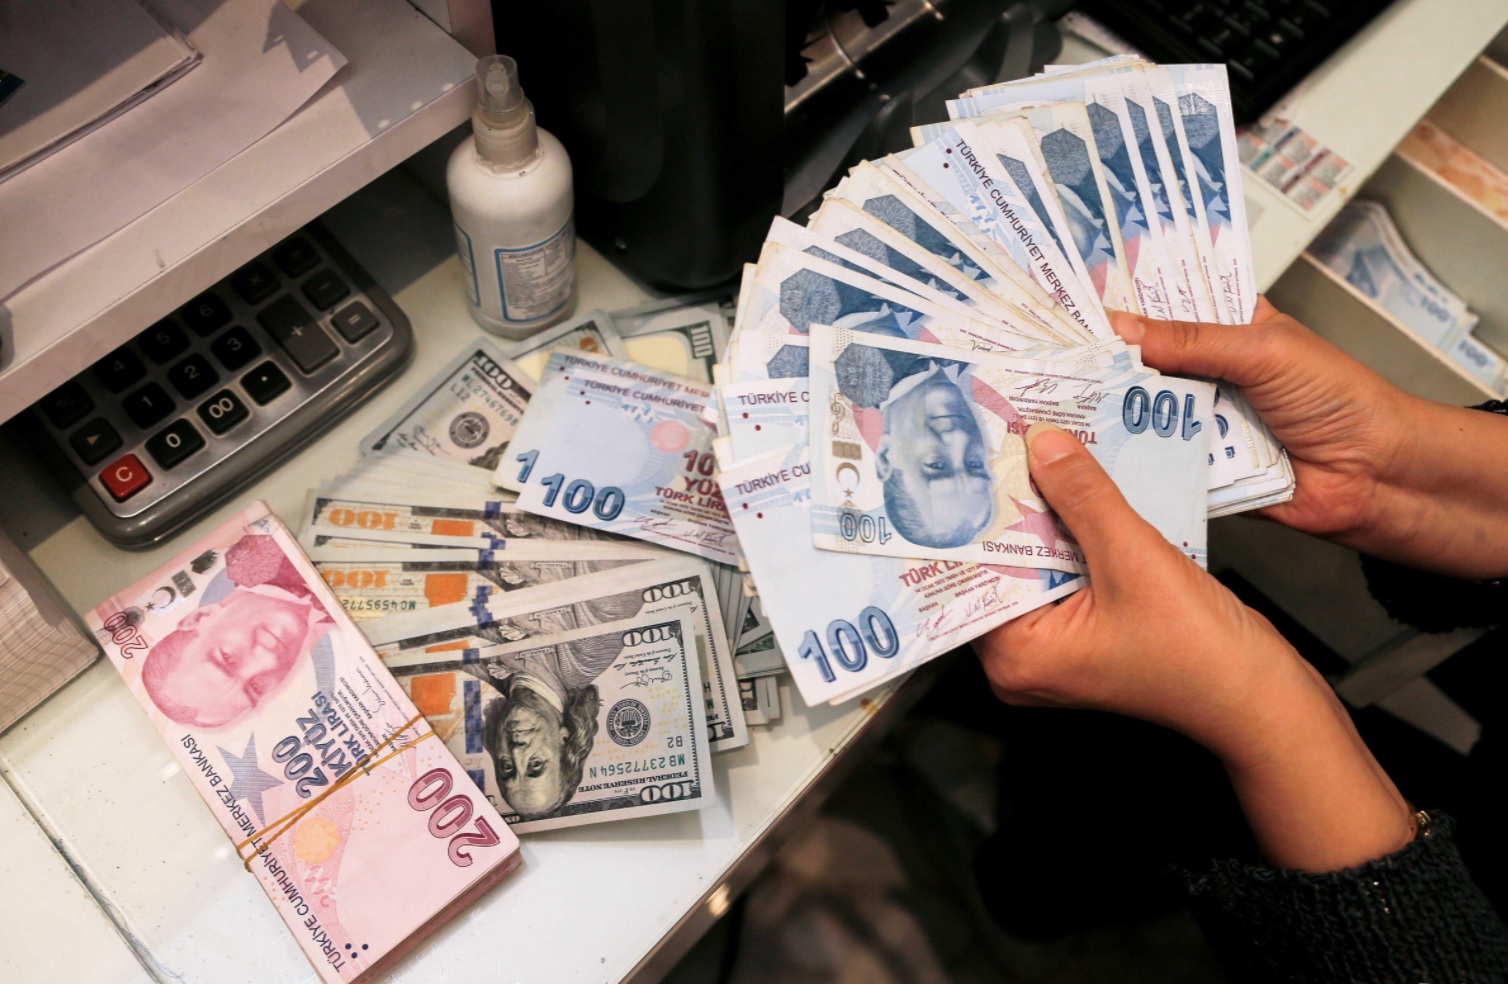 The Turkish lira is depreciating against the dollar